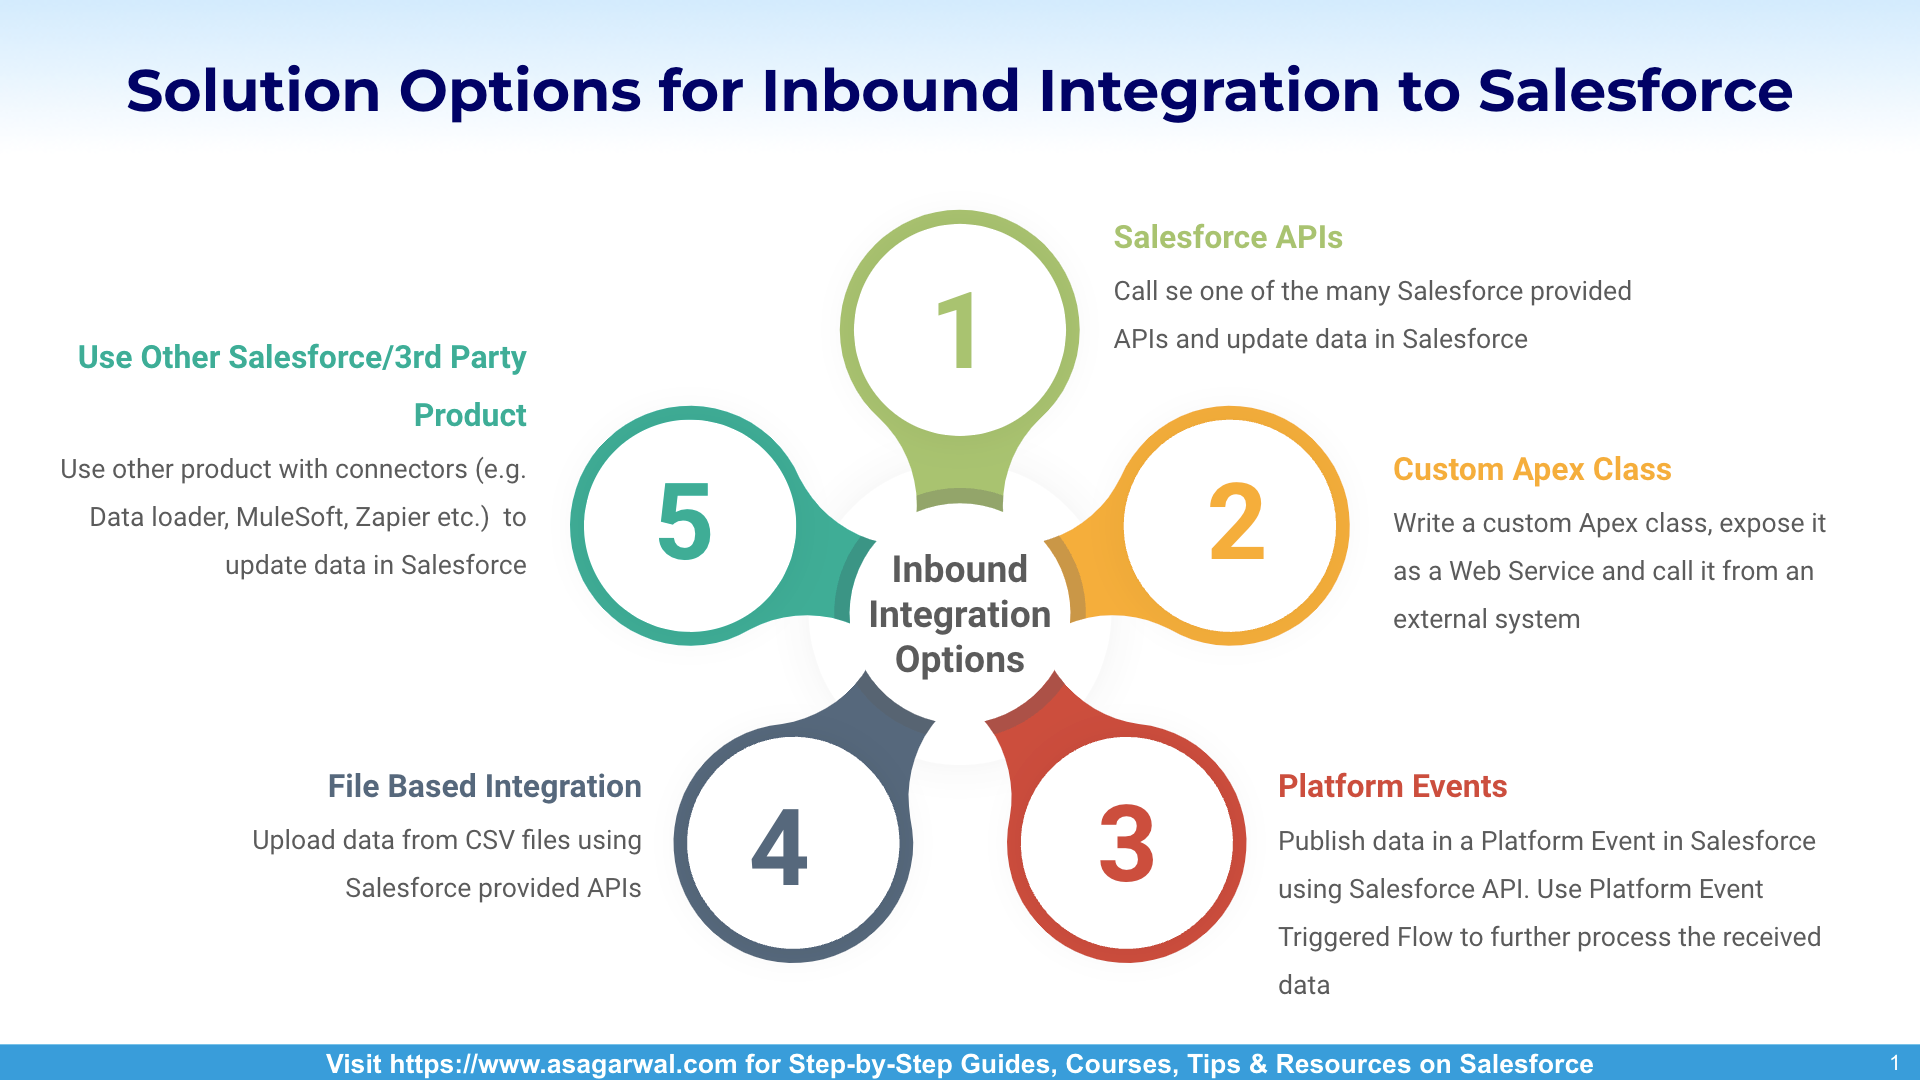 Solution Options for Inbound Integration to Salesforce